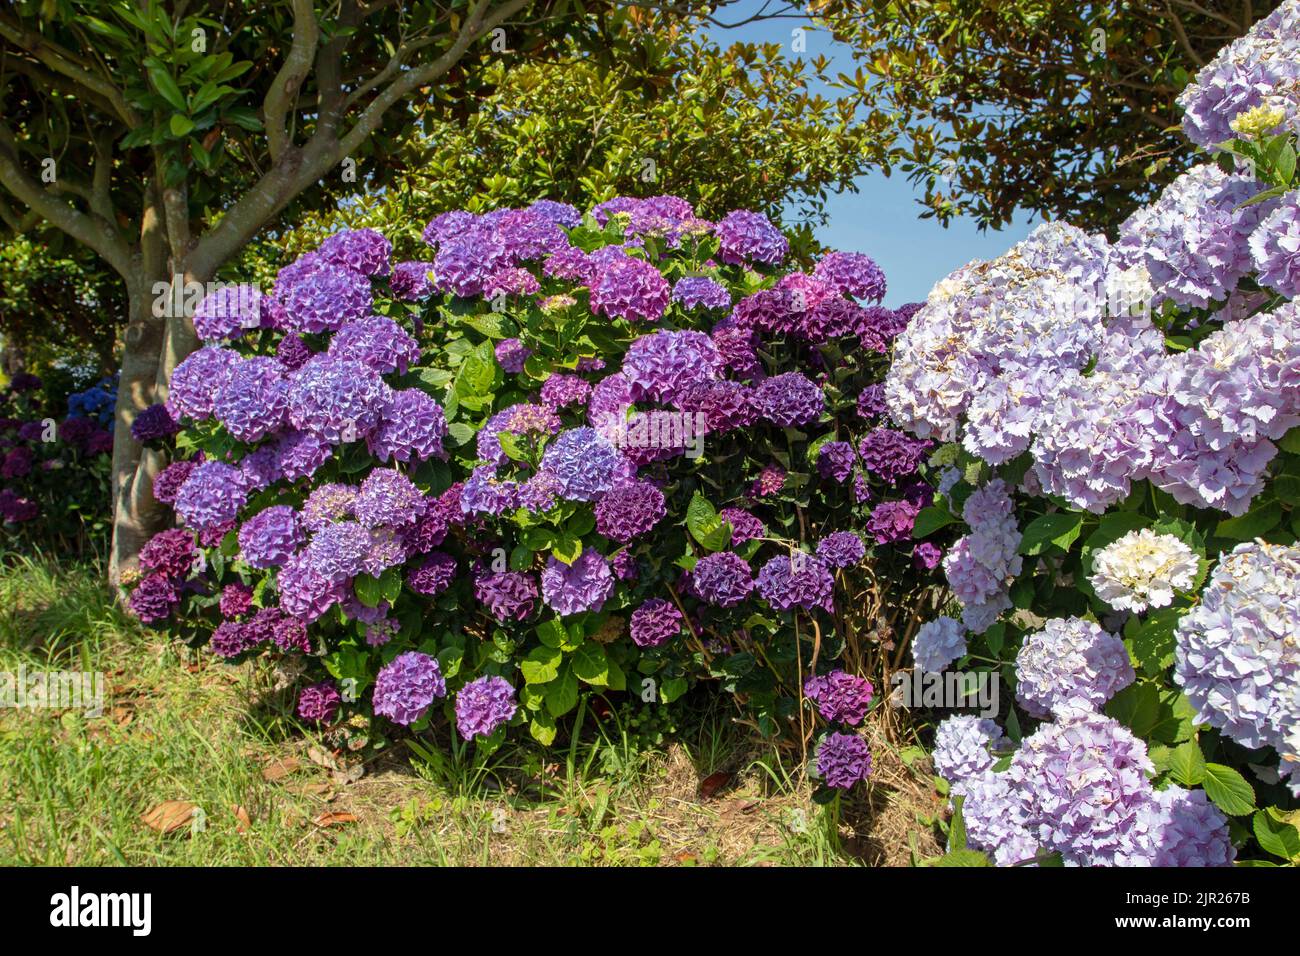 Rosa pallido e viola scuro hydrangea macrophylla fiori. Hortensia pianta fioritura nel giardino soleggiato. Foto Stock